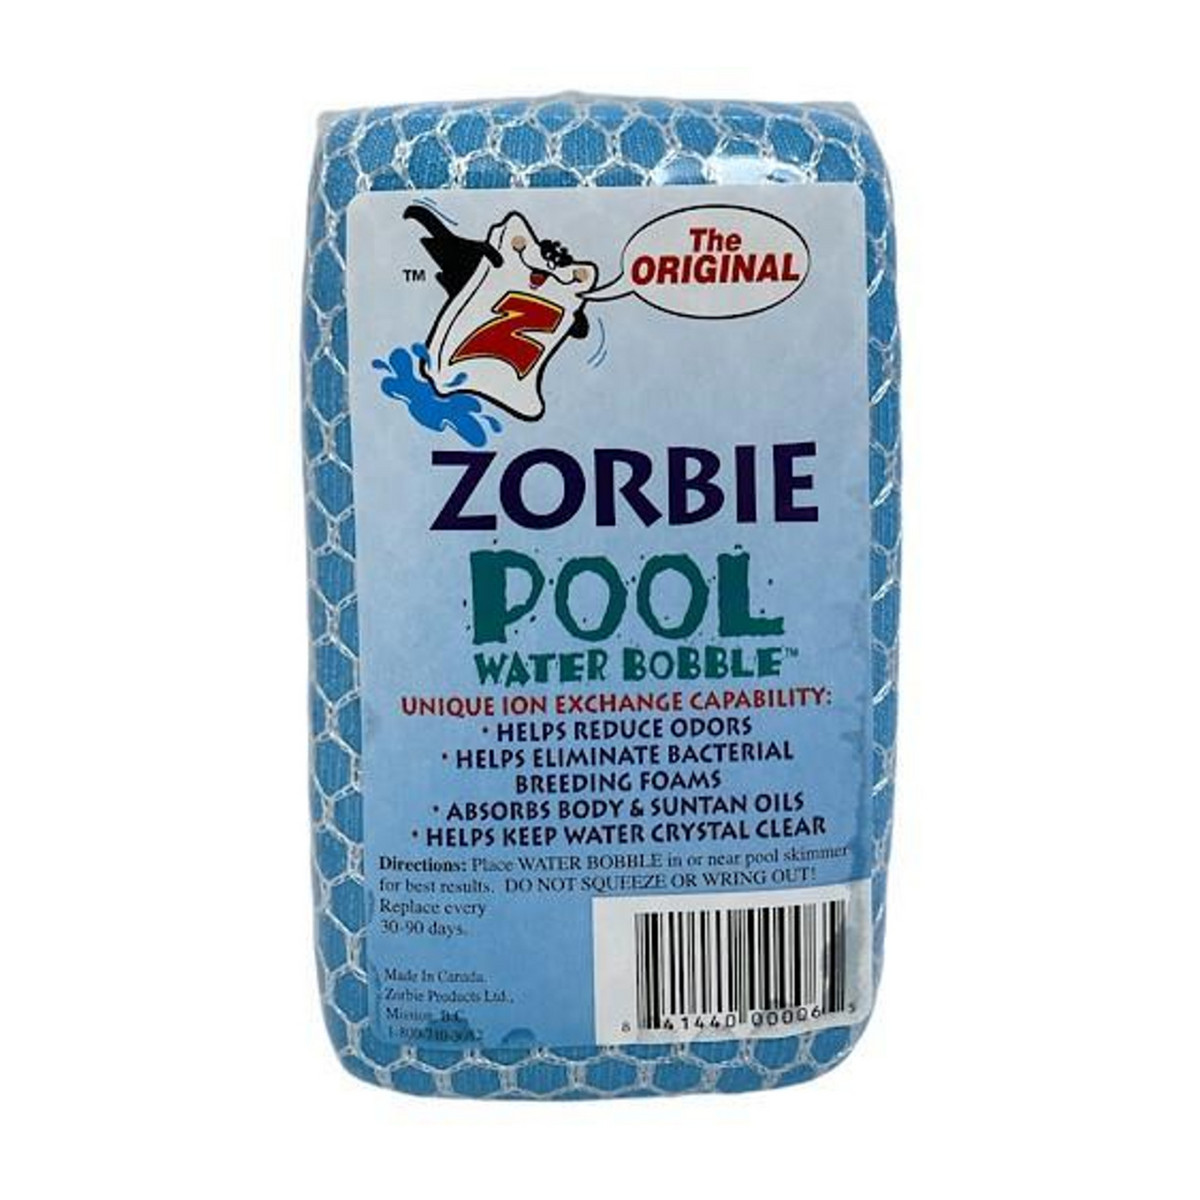 Zorbie Pool Water Bobble - Removes Pool Contaminants